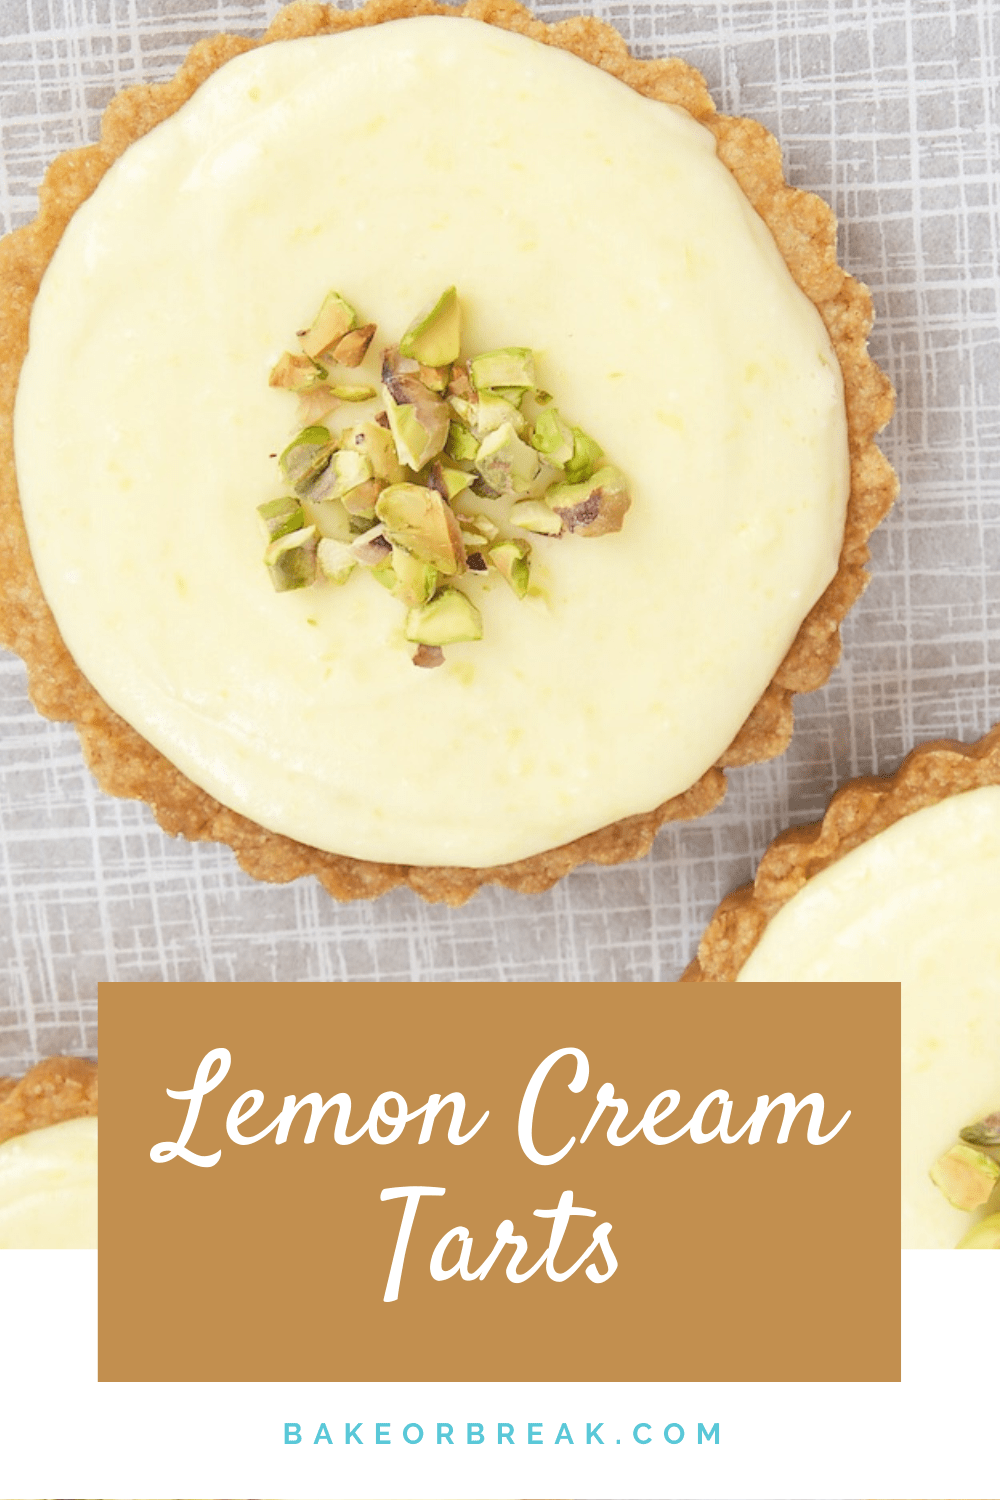 Lemon Cream Tarts bakeorbreak.com